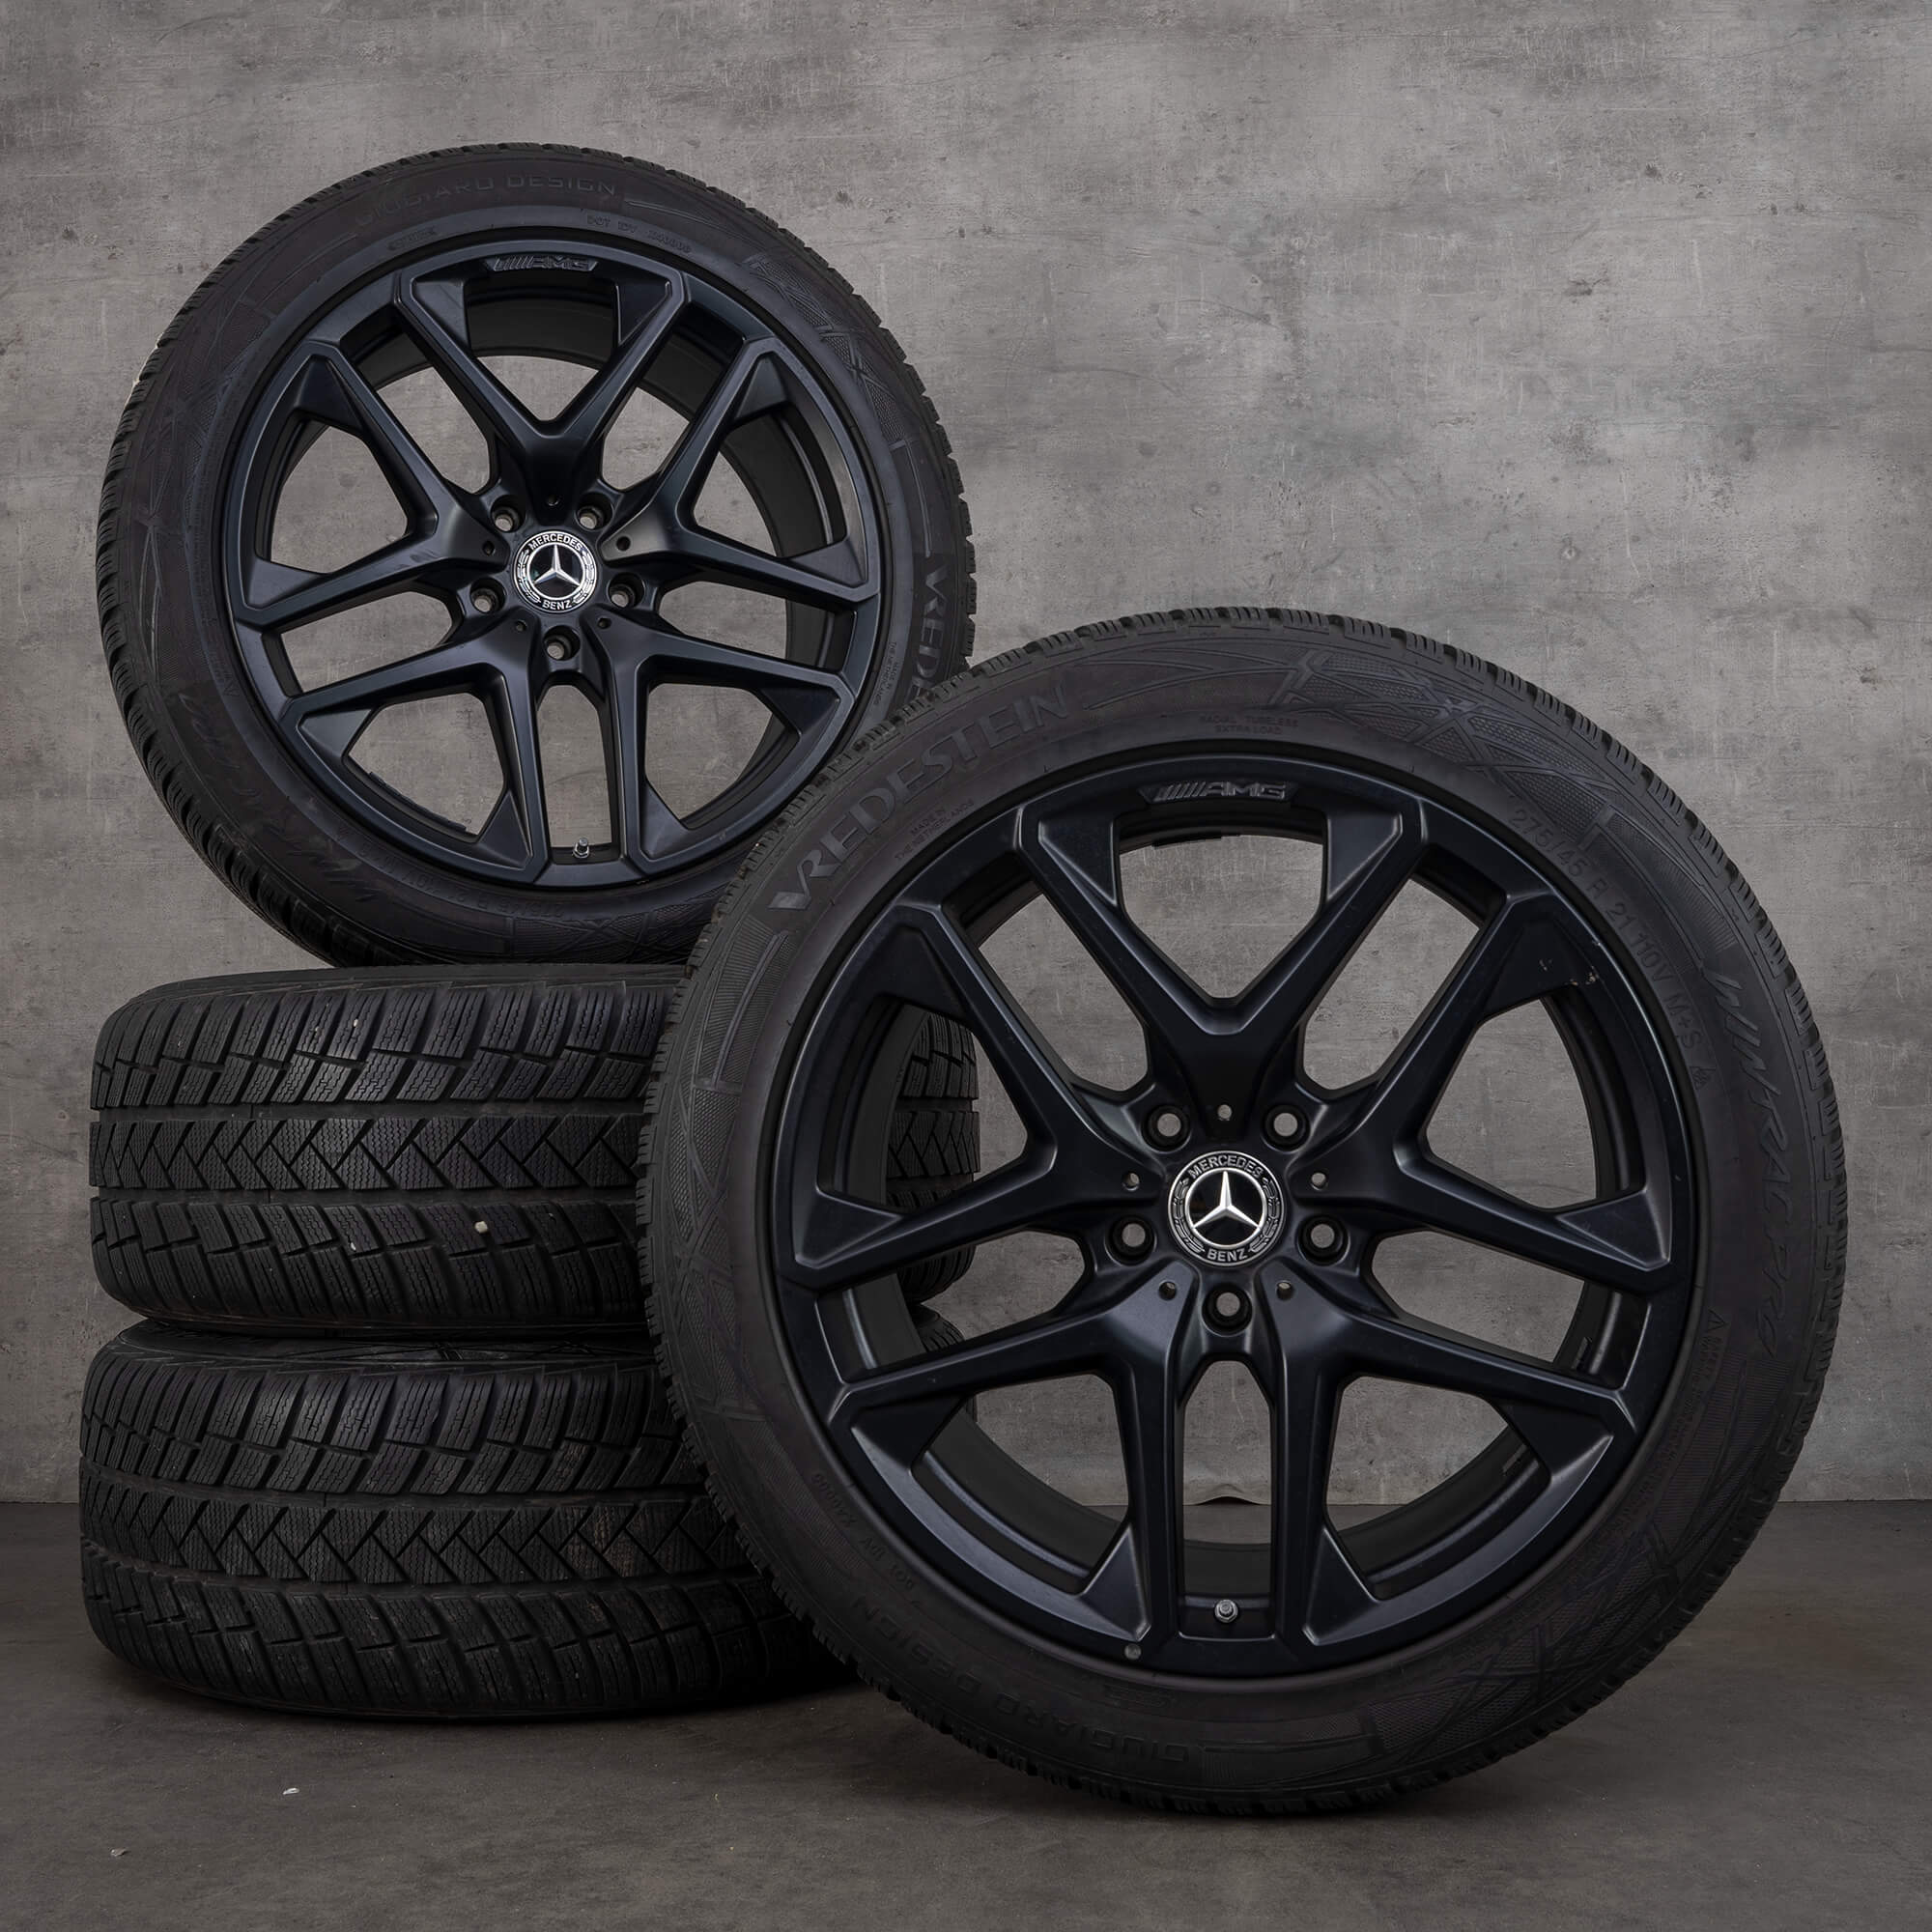 W463 G63 AMG winter tires Mercedes Benz 21 inch wheels A4634011900 8 mm